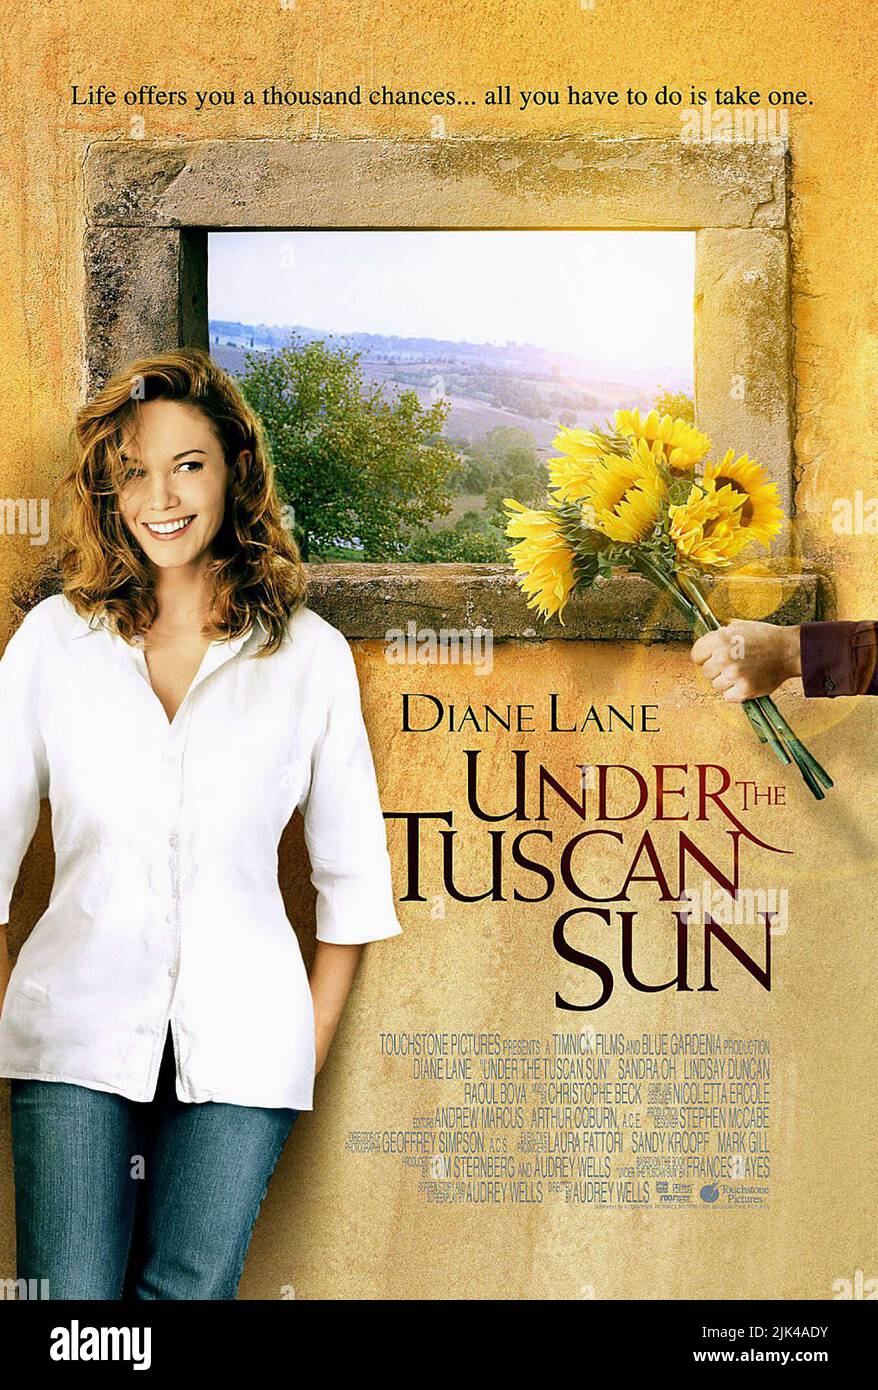 DIANE LANE, UNDER THE TUSCAN SUN, 2003 Stock Photo